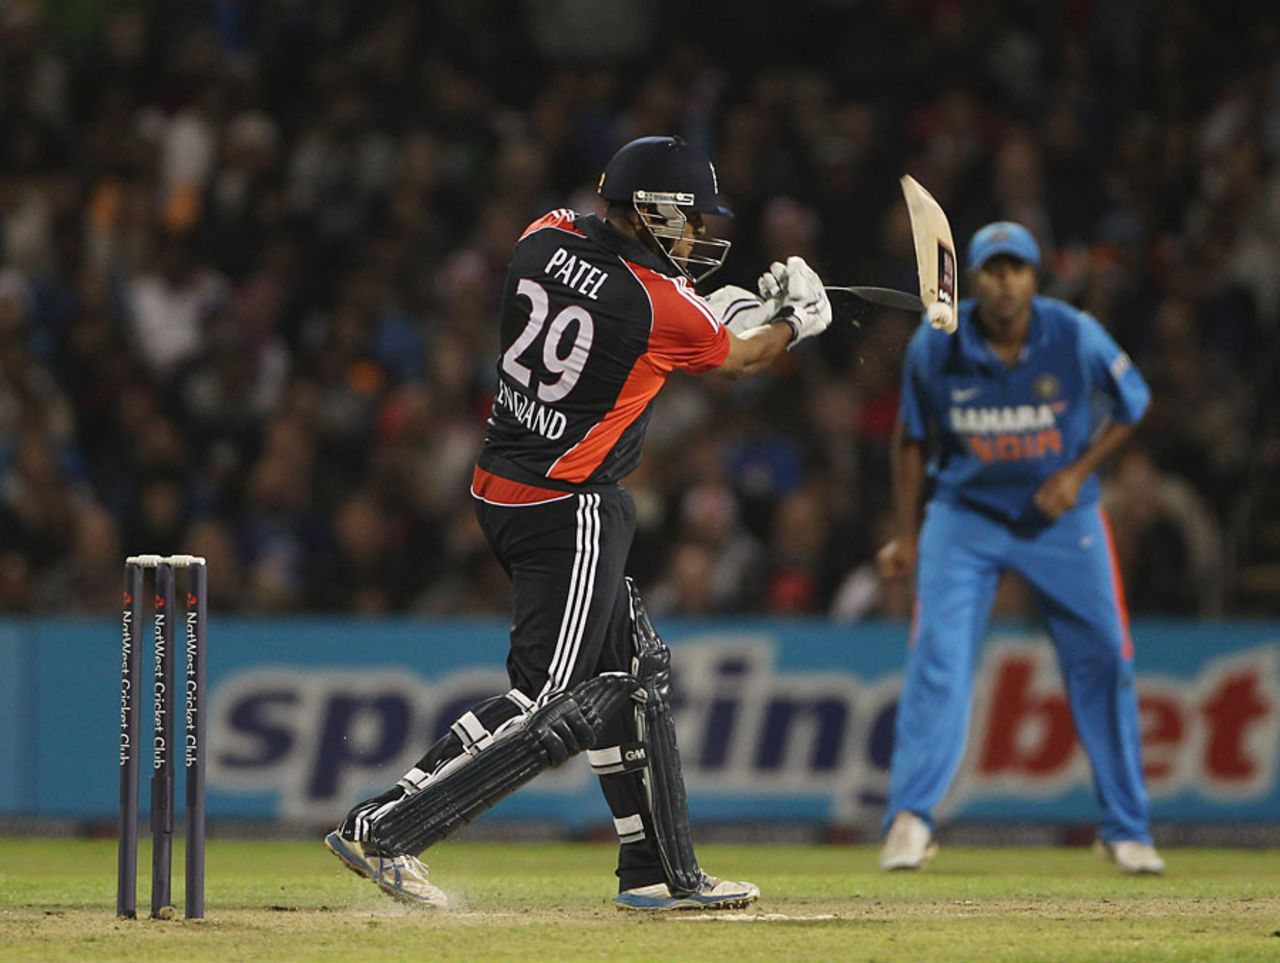 Samit Patel's bat splits apart as he throws himself into a drive, England v India, Twenty20, Old Trafford, August 31, 2011